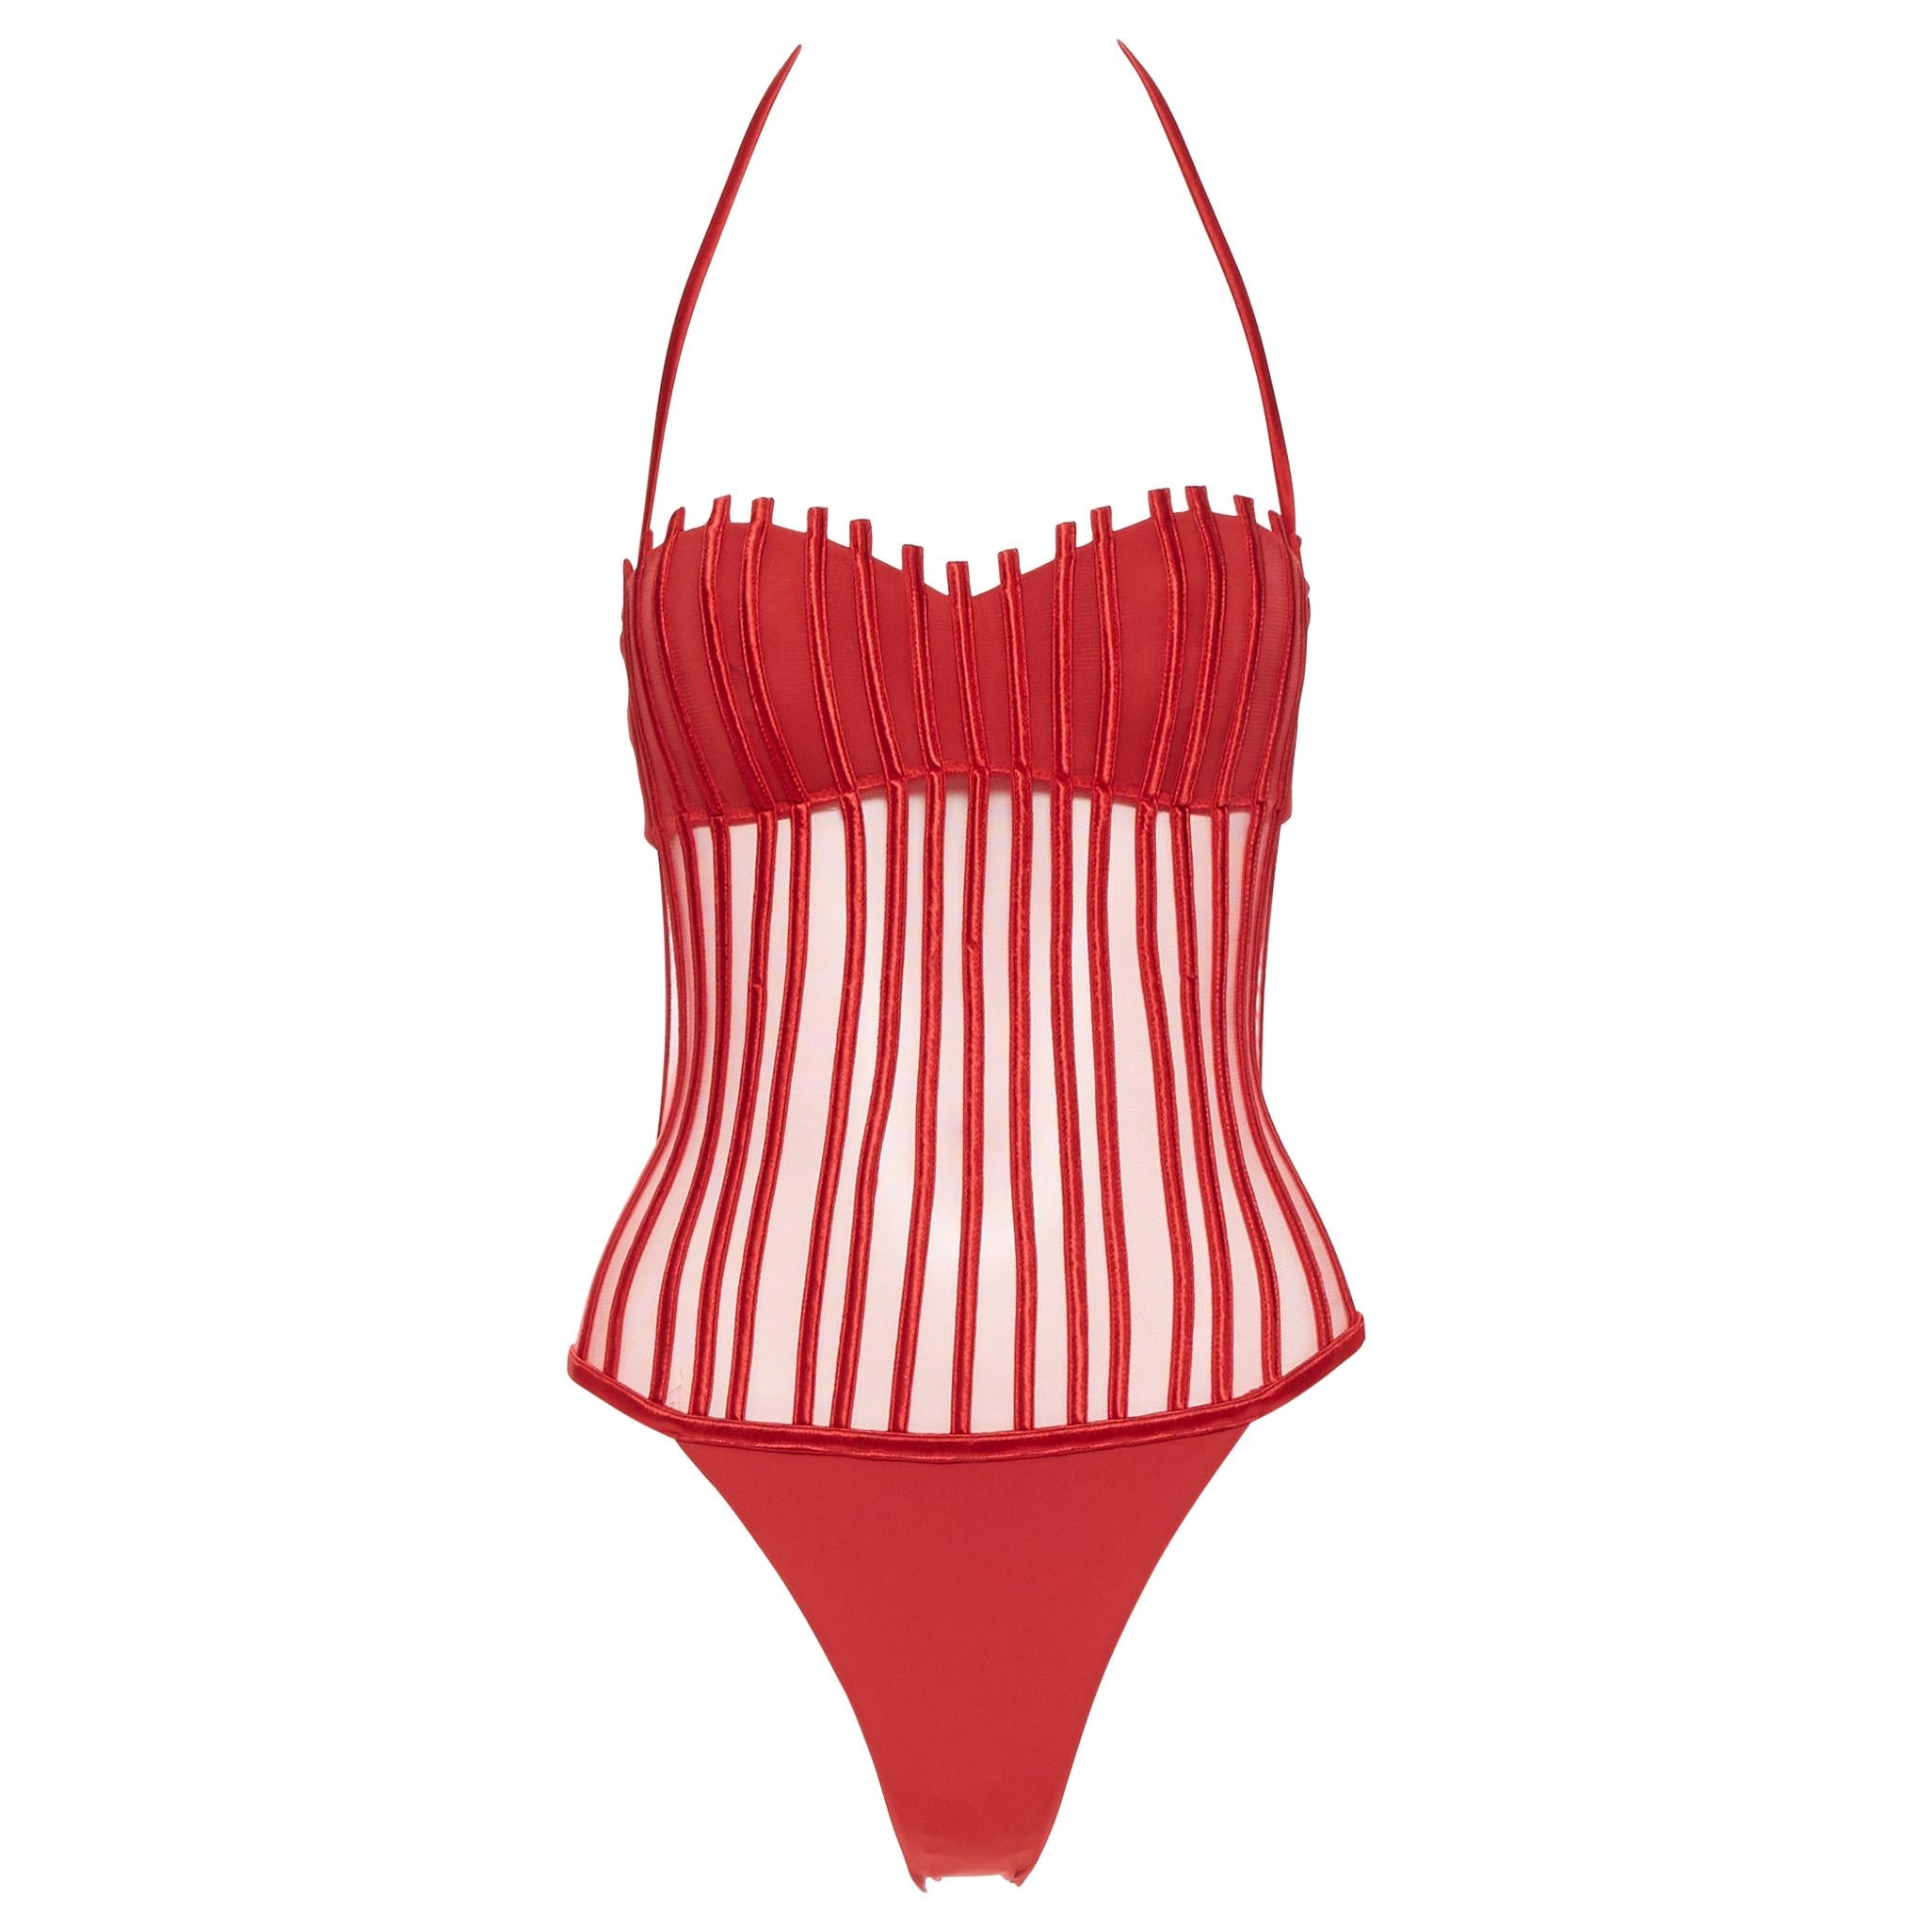 new LA PERLA Graphique Couture red boned sheer body monokini swimsuit IT42B S